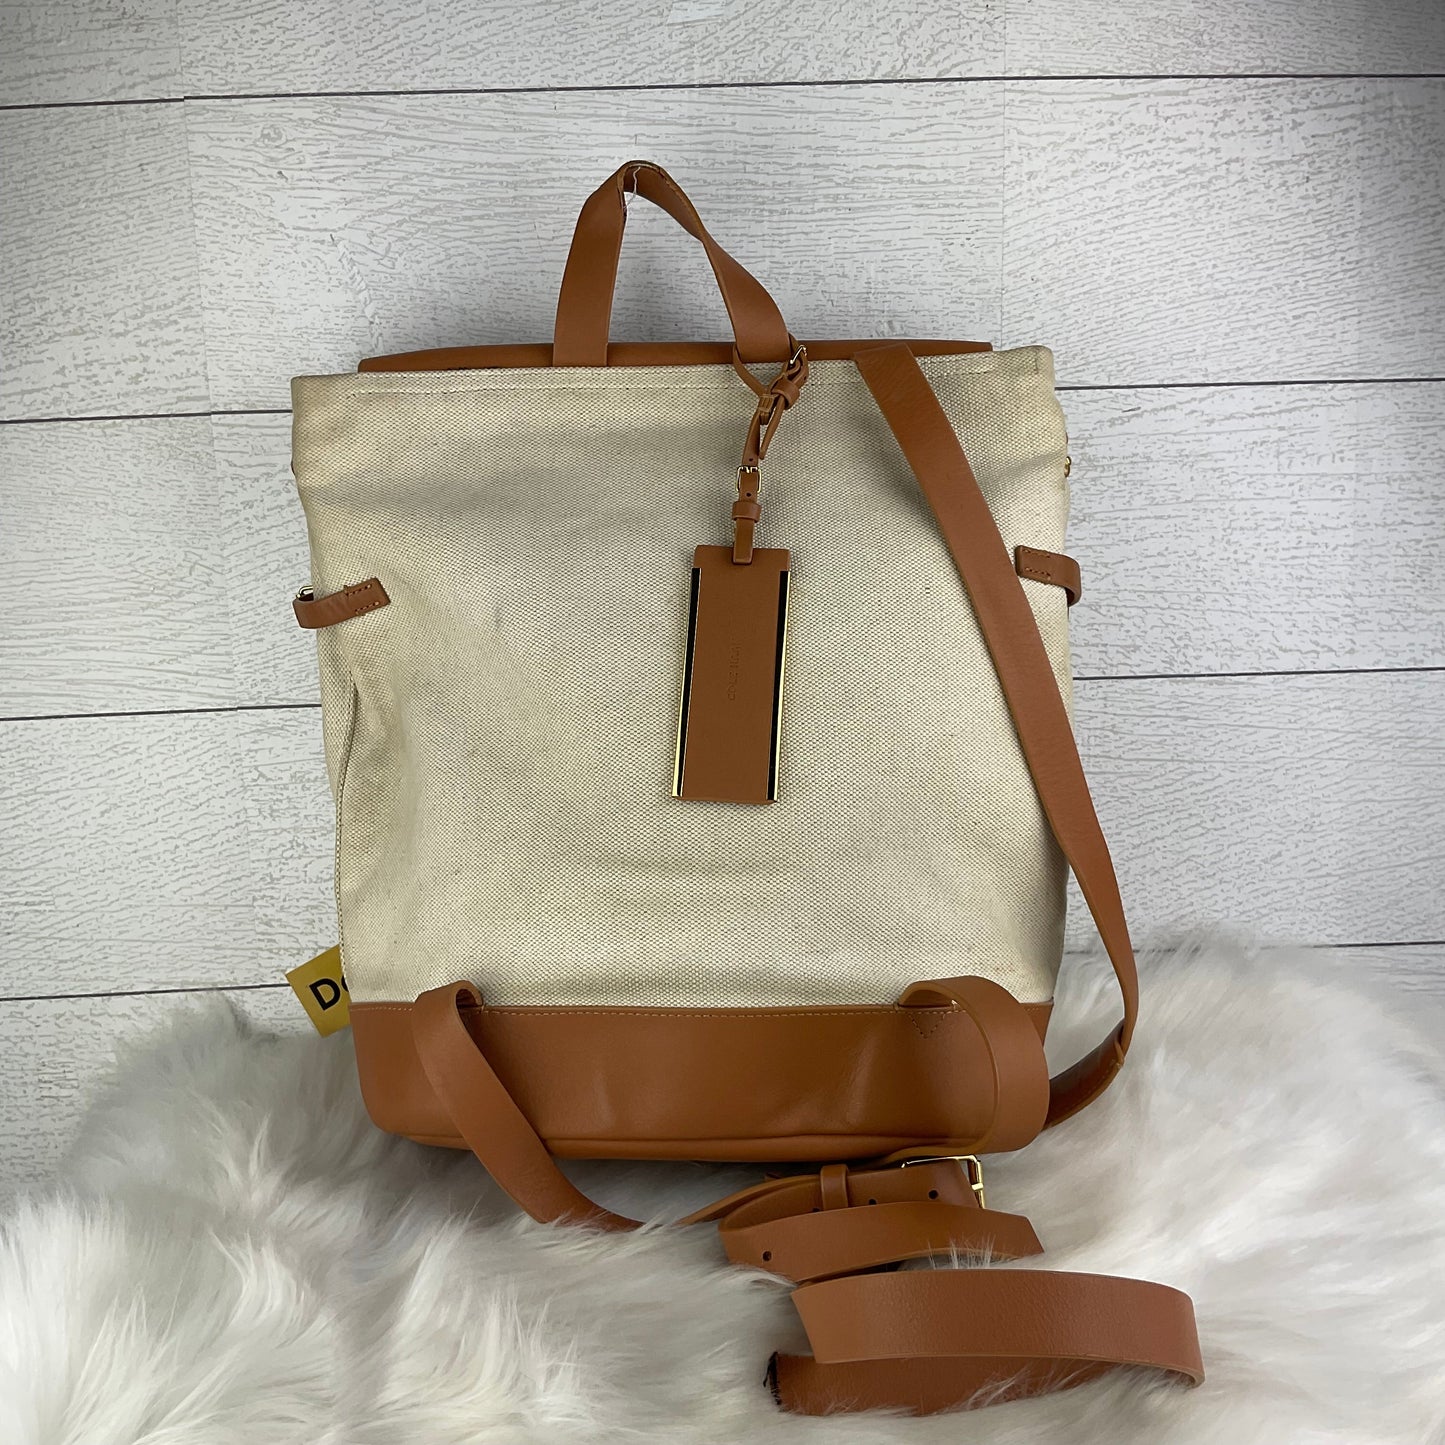 Backpack Designer By Cole-haan  Size: Medium